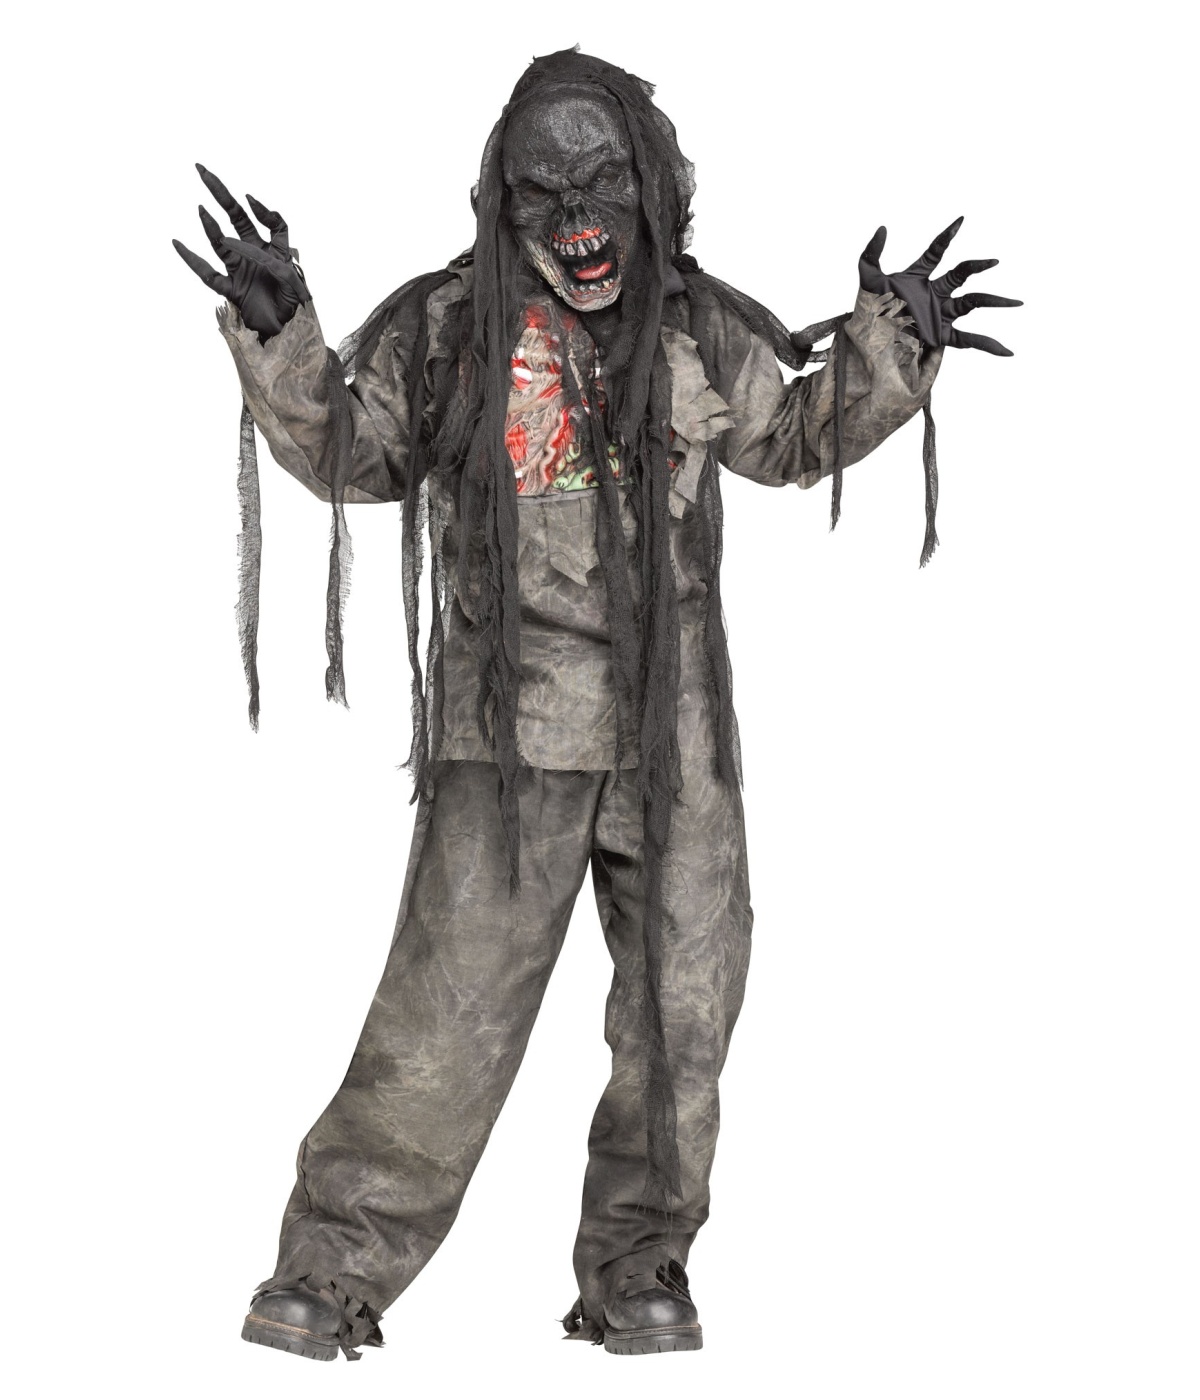  Boys Dead Zombie Costume